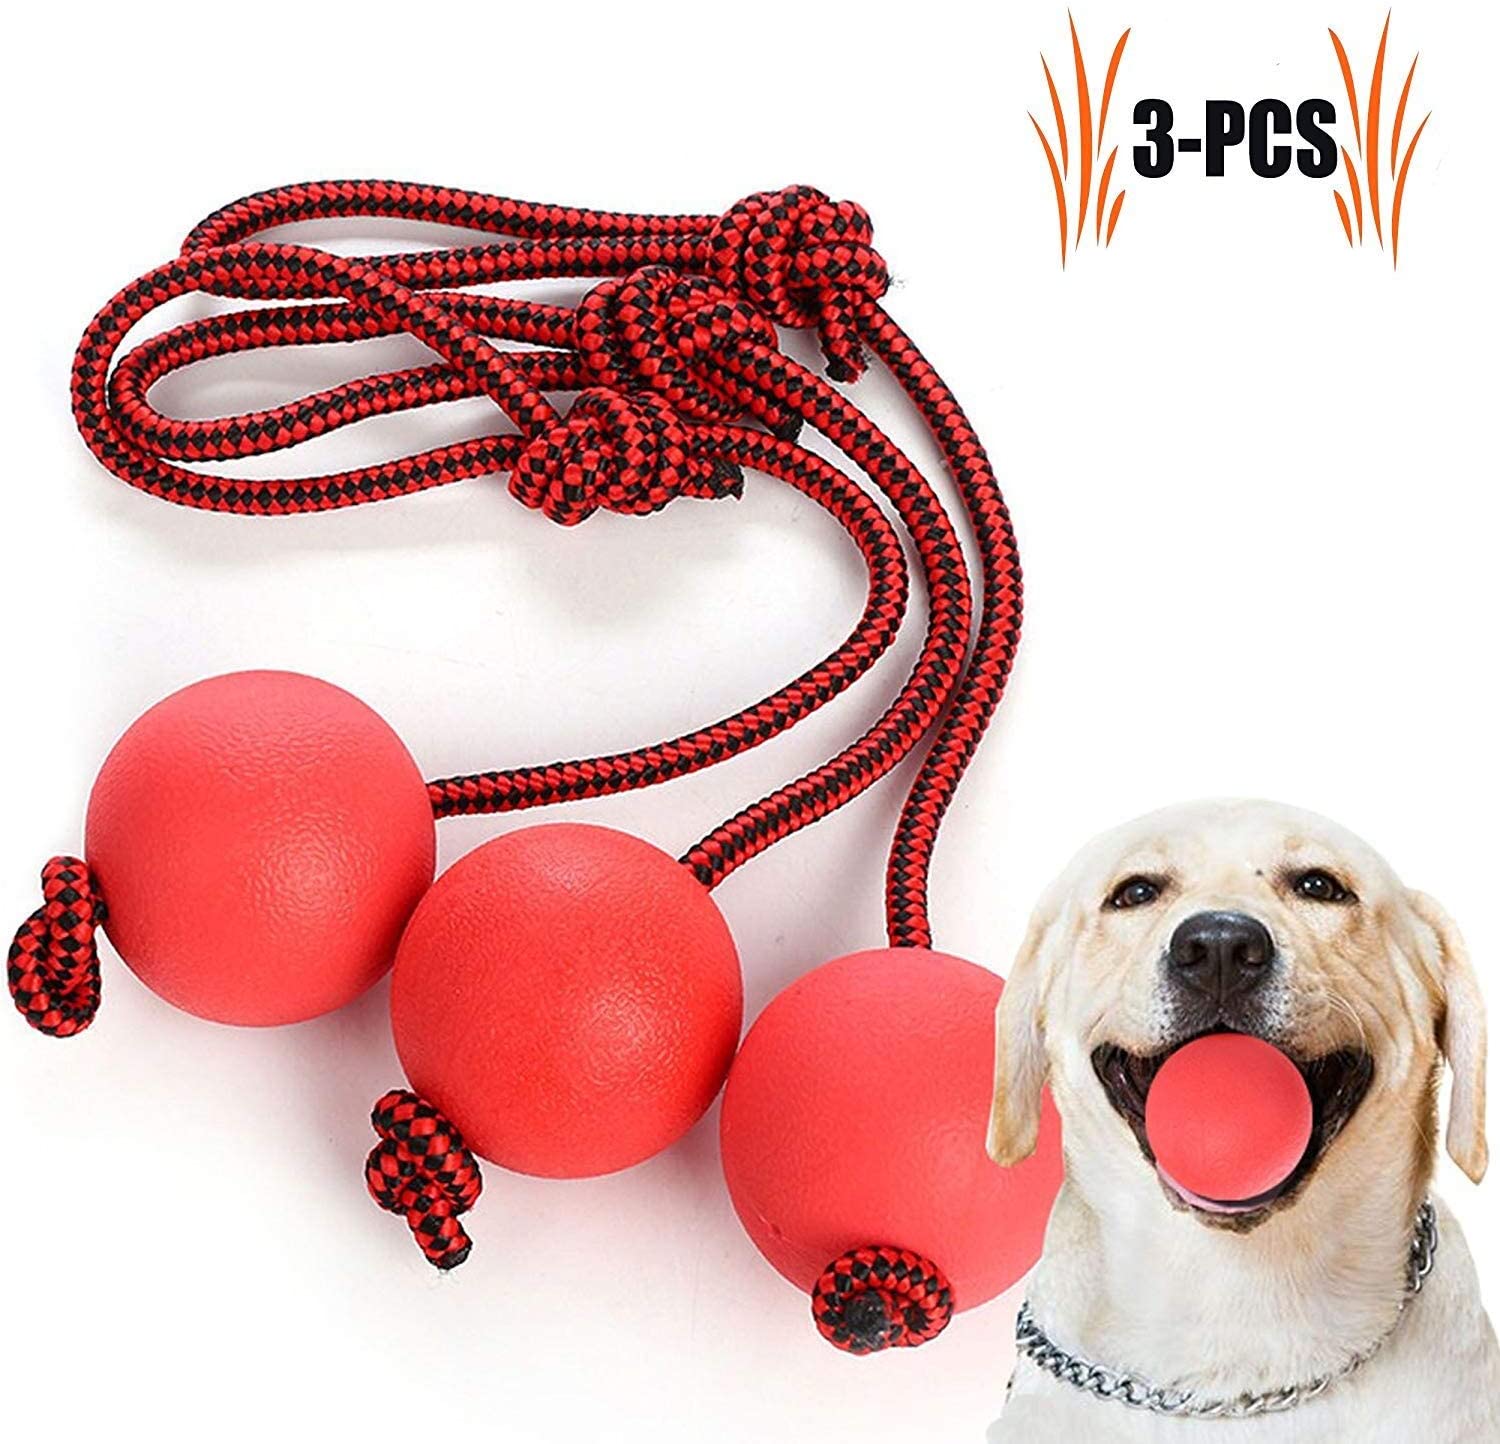 15tlg Set Hundespielzeug aus Seil Kauspielzeug Pet Dog Toy Hund Welpen Kauen DHL 